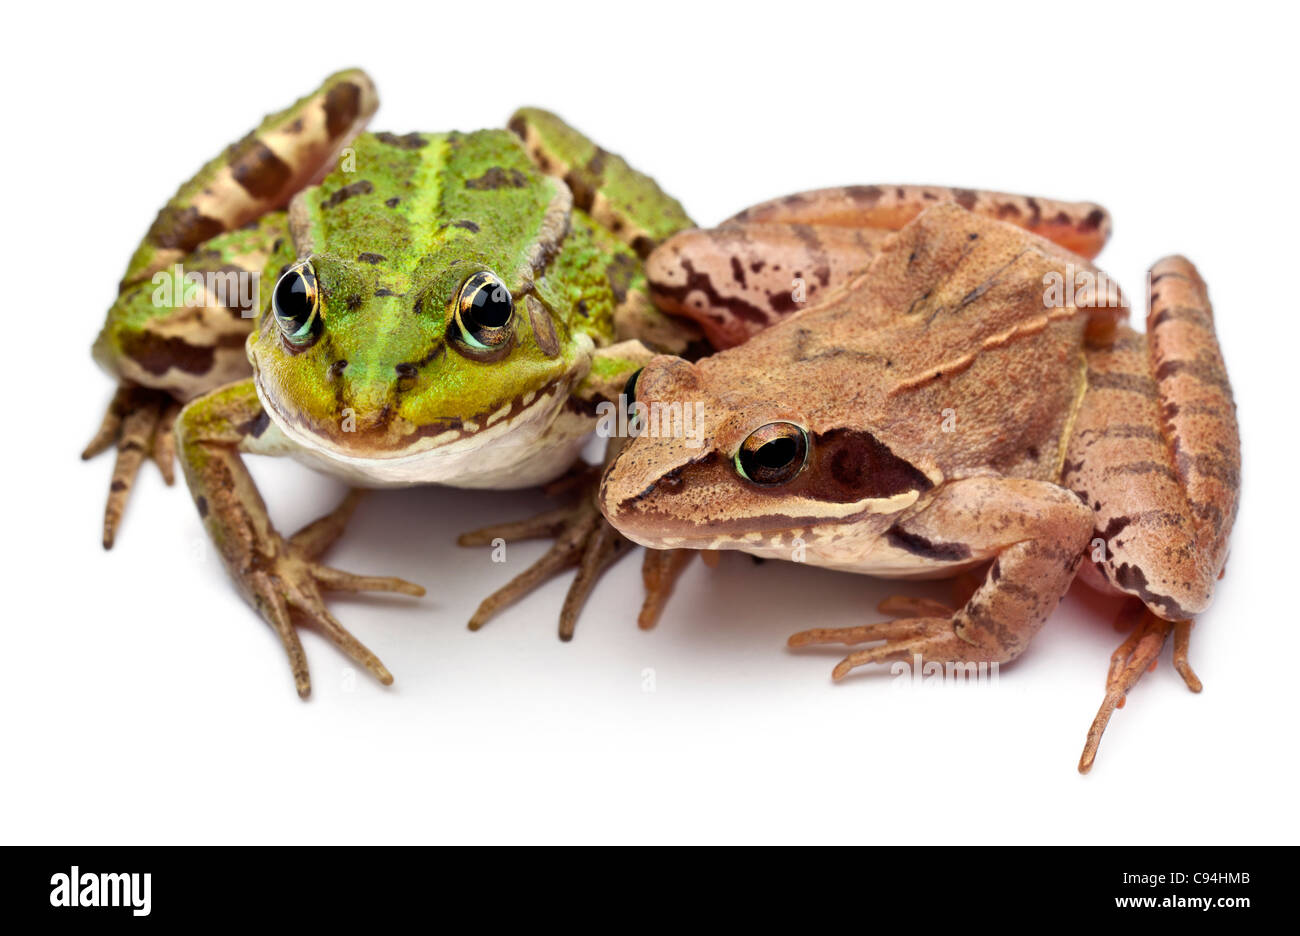 Européen Commun ou grenouille grenouille comestible, Rana esculenta, et a Moor Frog, Rana arvalis, in front of white background Banque D'Images